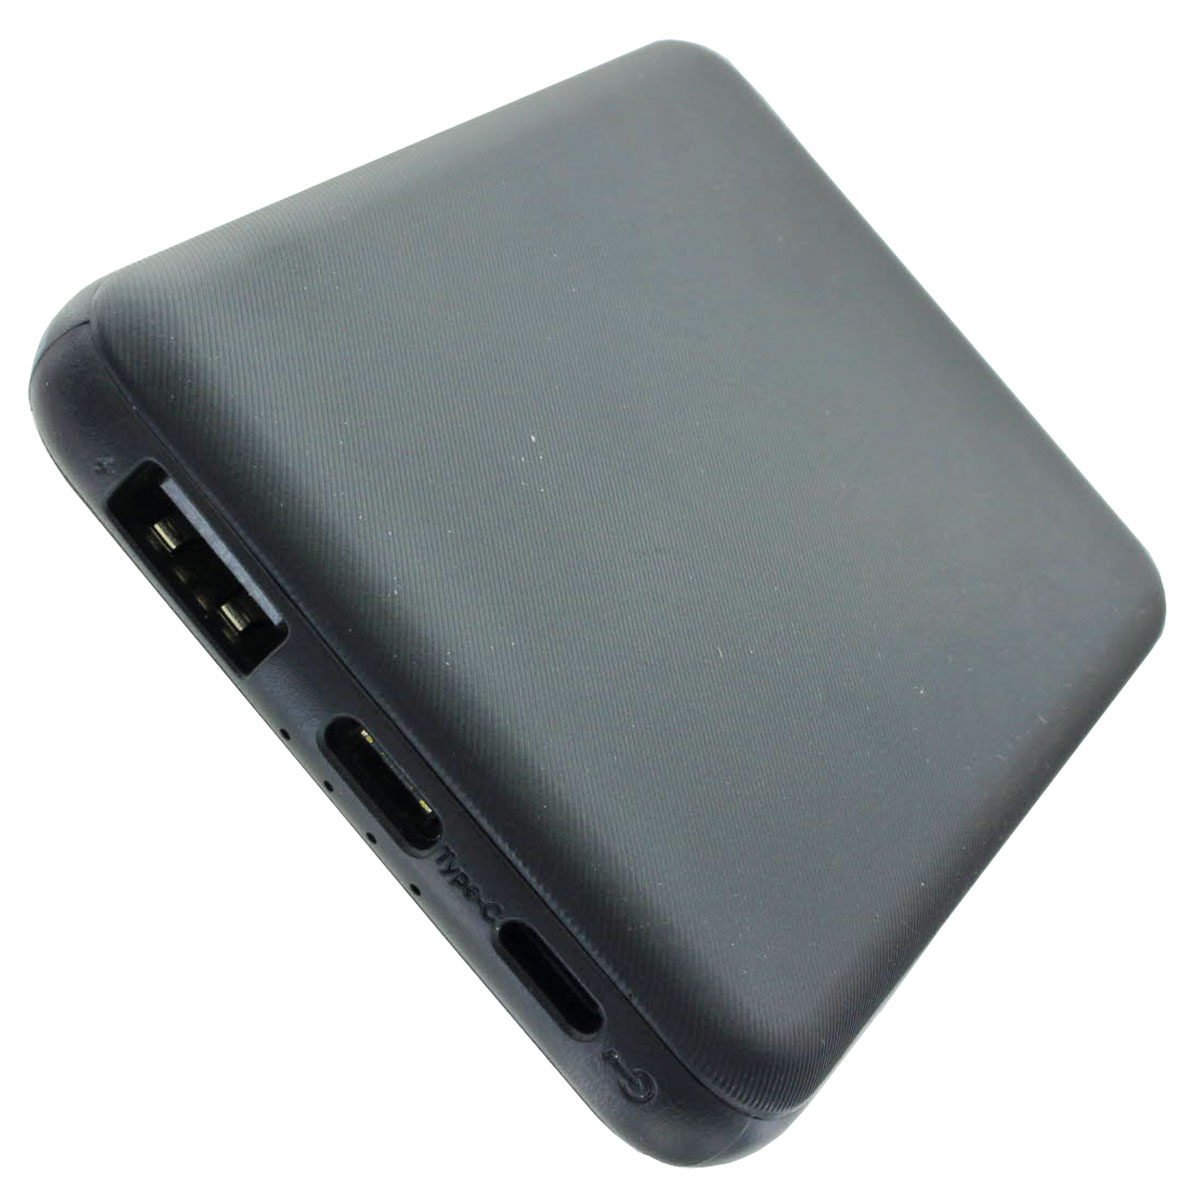 Powerbank Li-Polymer mit 5000mAh, LED-Indikator, Micro-USB und USB-C Ausgang